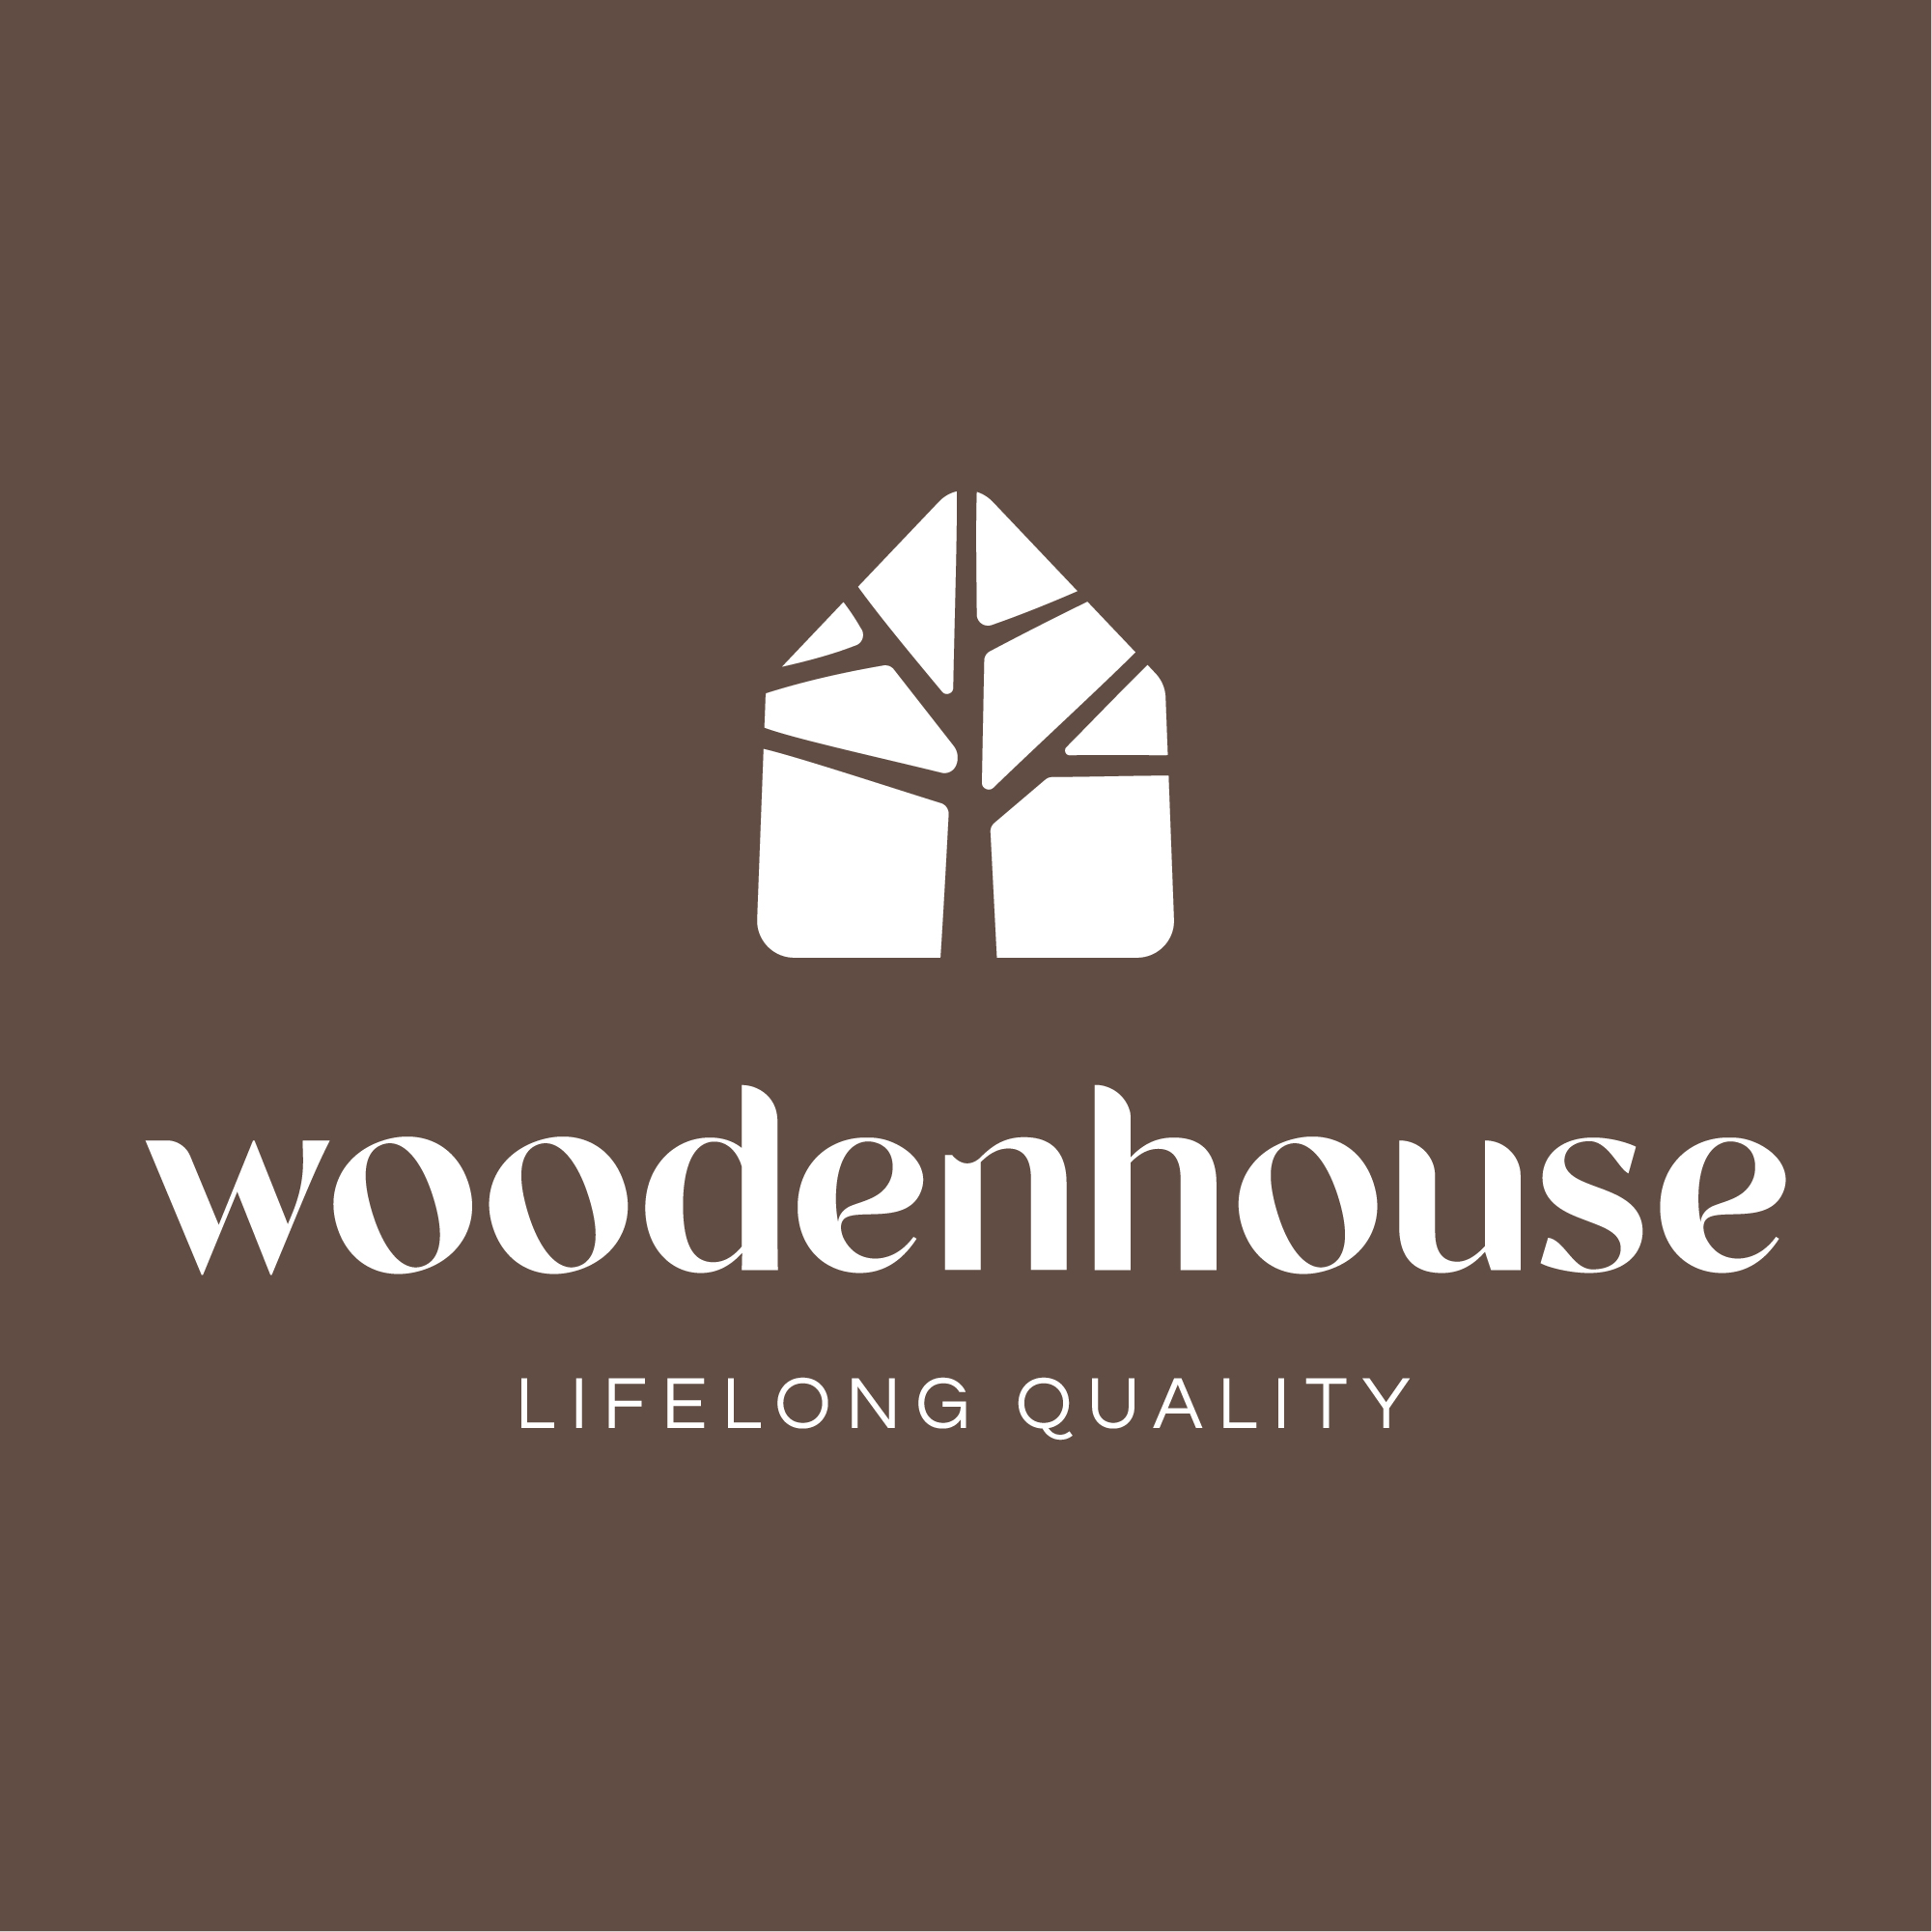 Brandvised to Purchase New Kitchen Utensils Brand Named Woodenhouse